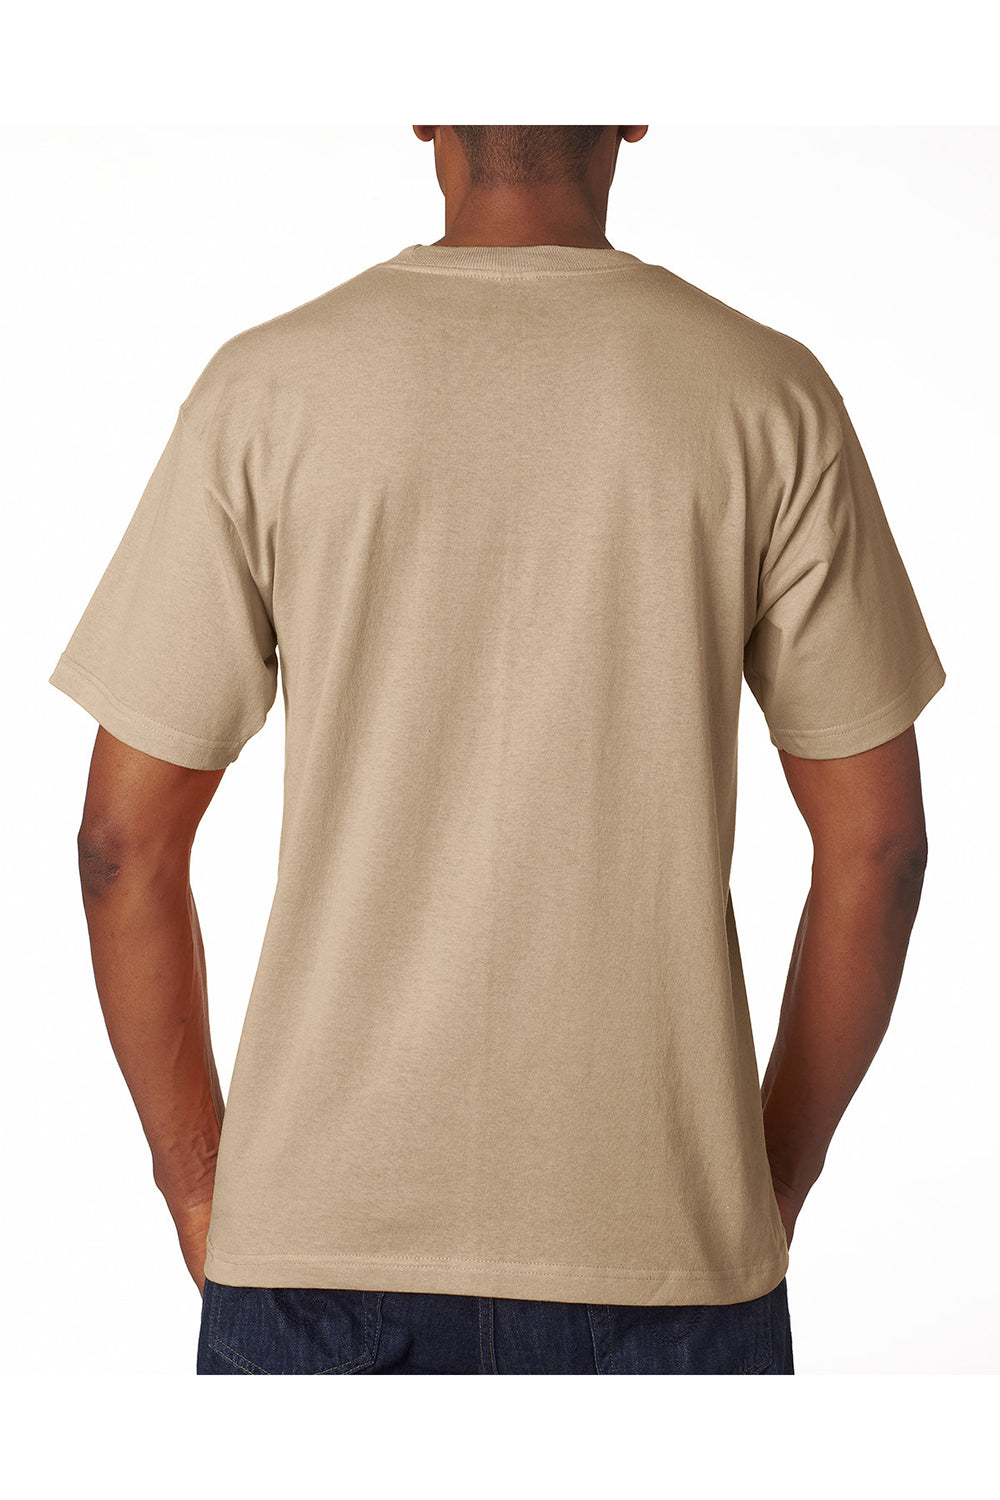 Bayside BA5100 Mens USA Made Short Sleeve Crewneck T-Shirt Sand Model Back